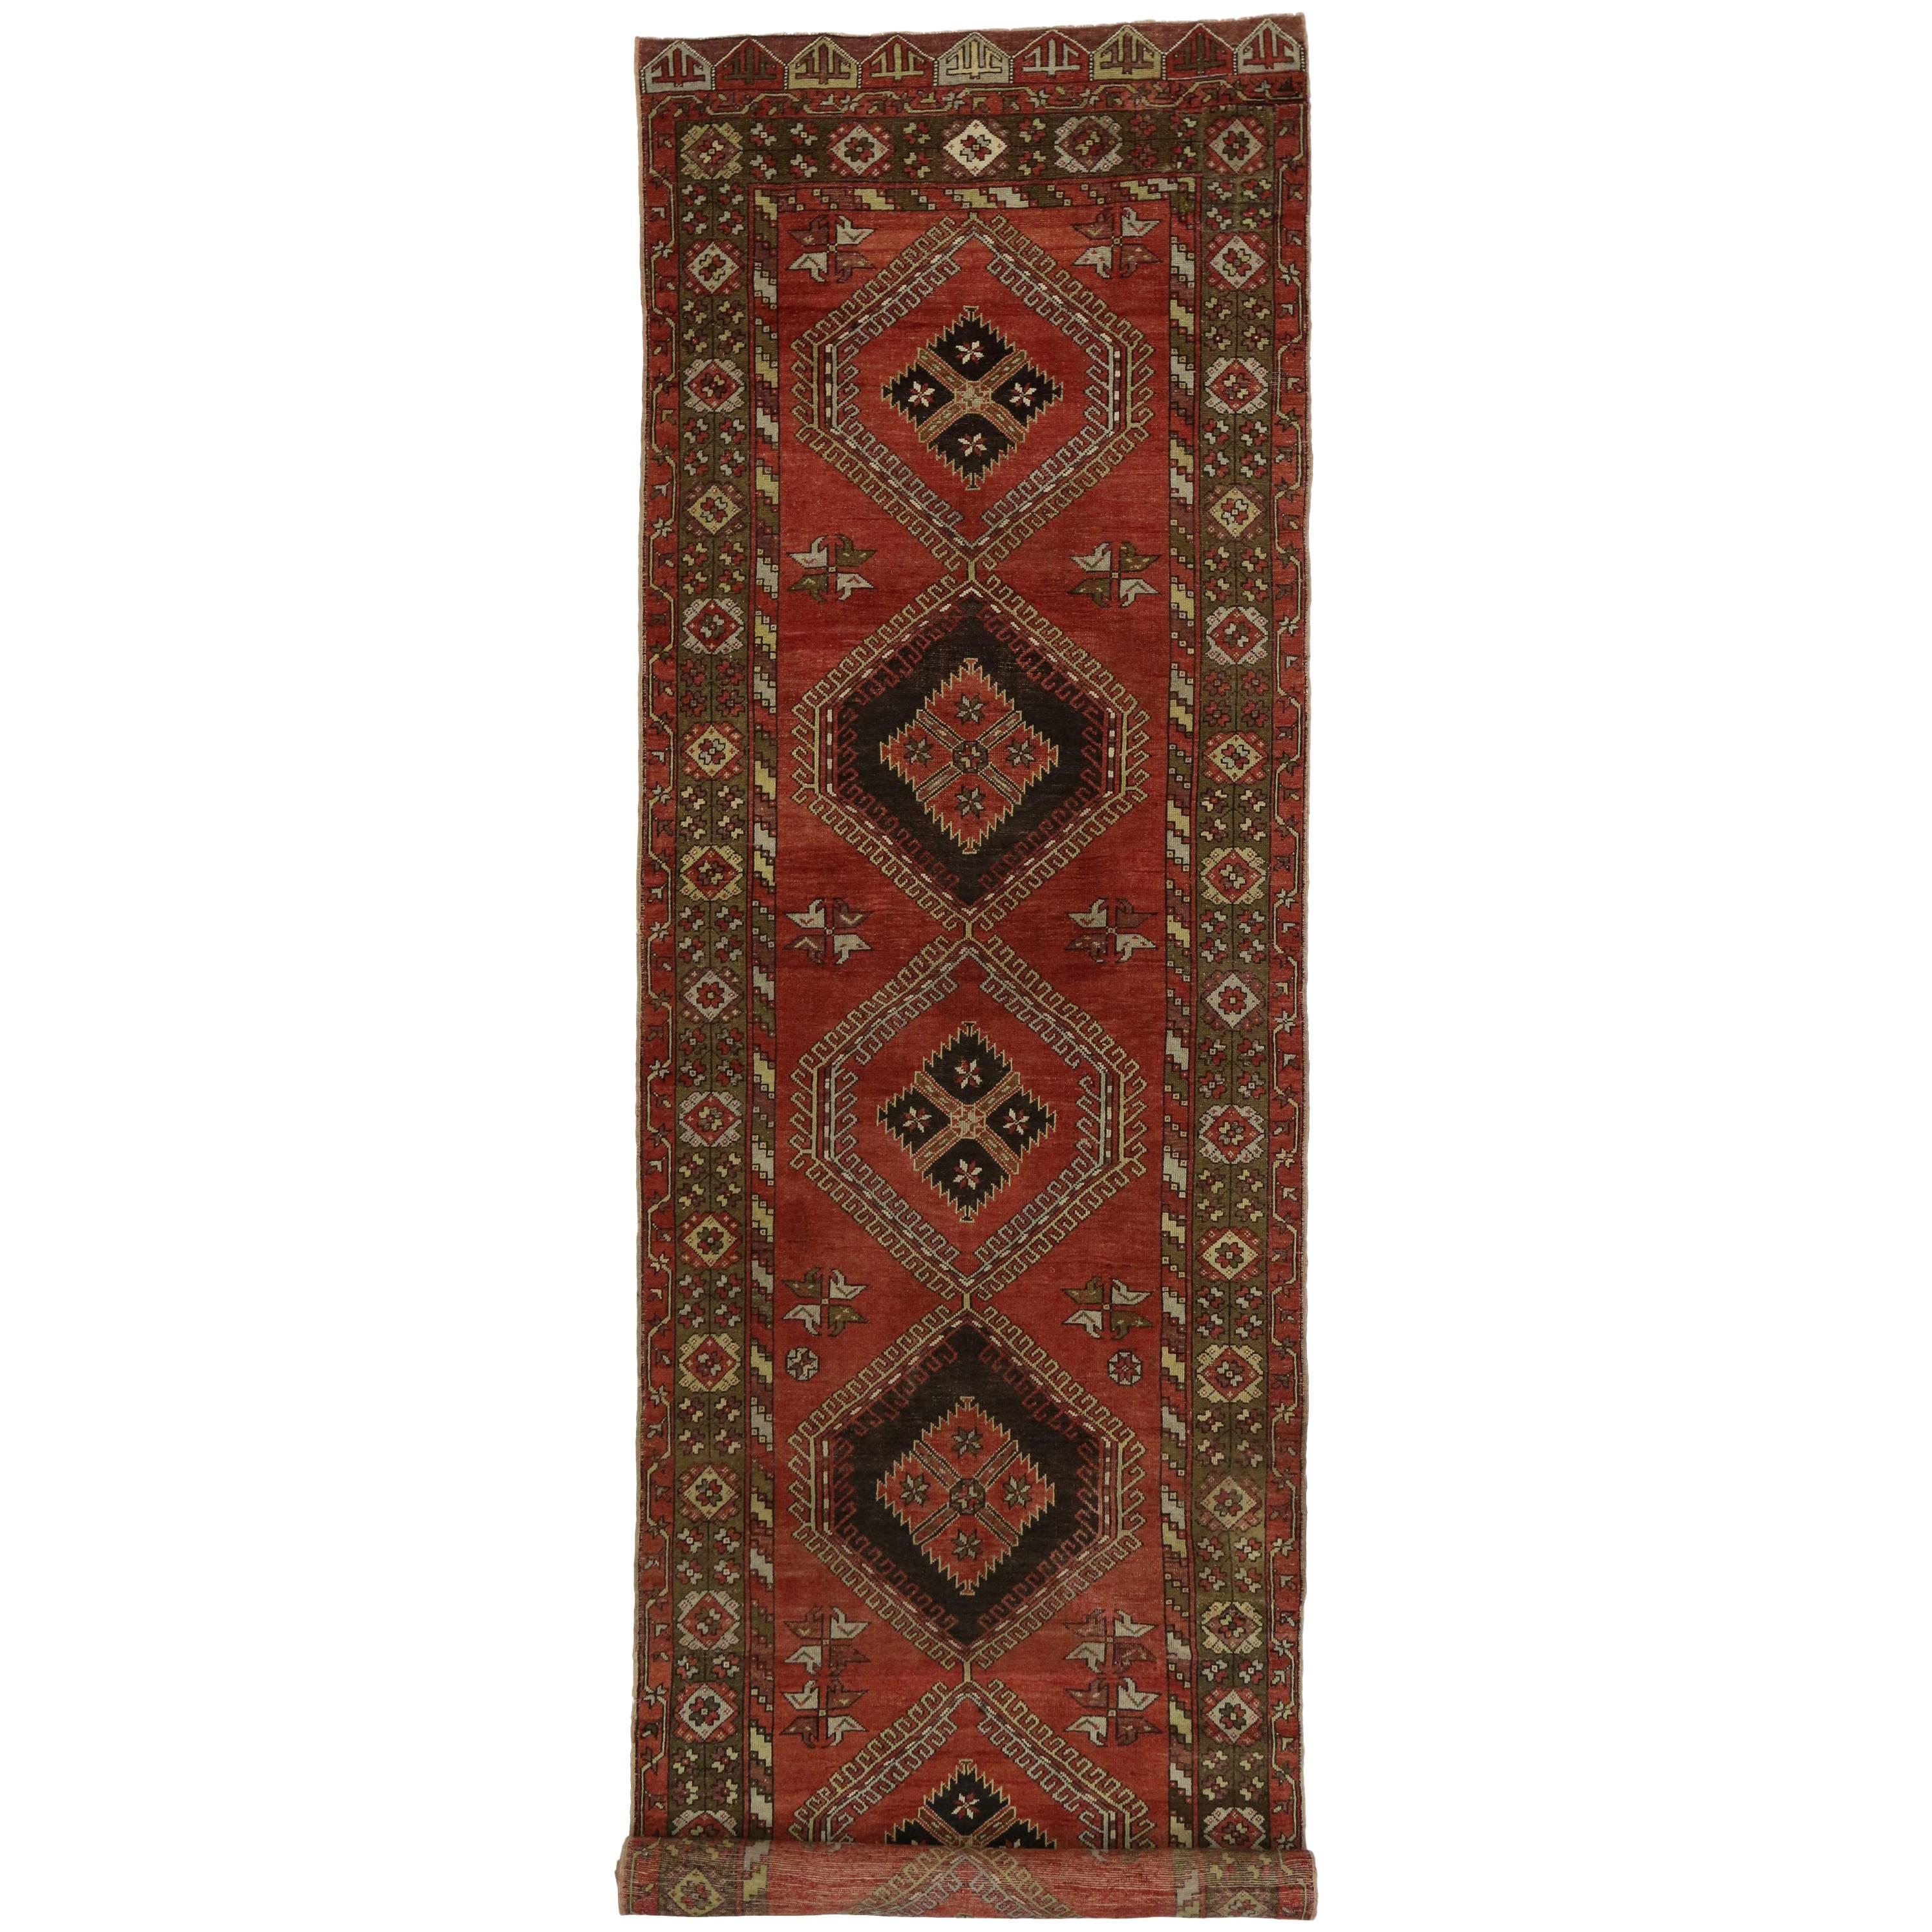 Vintage Turkish Oushak Long Carpet Runner with Mid-Century Modern Style